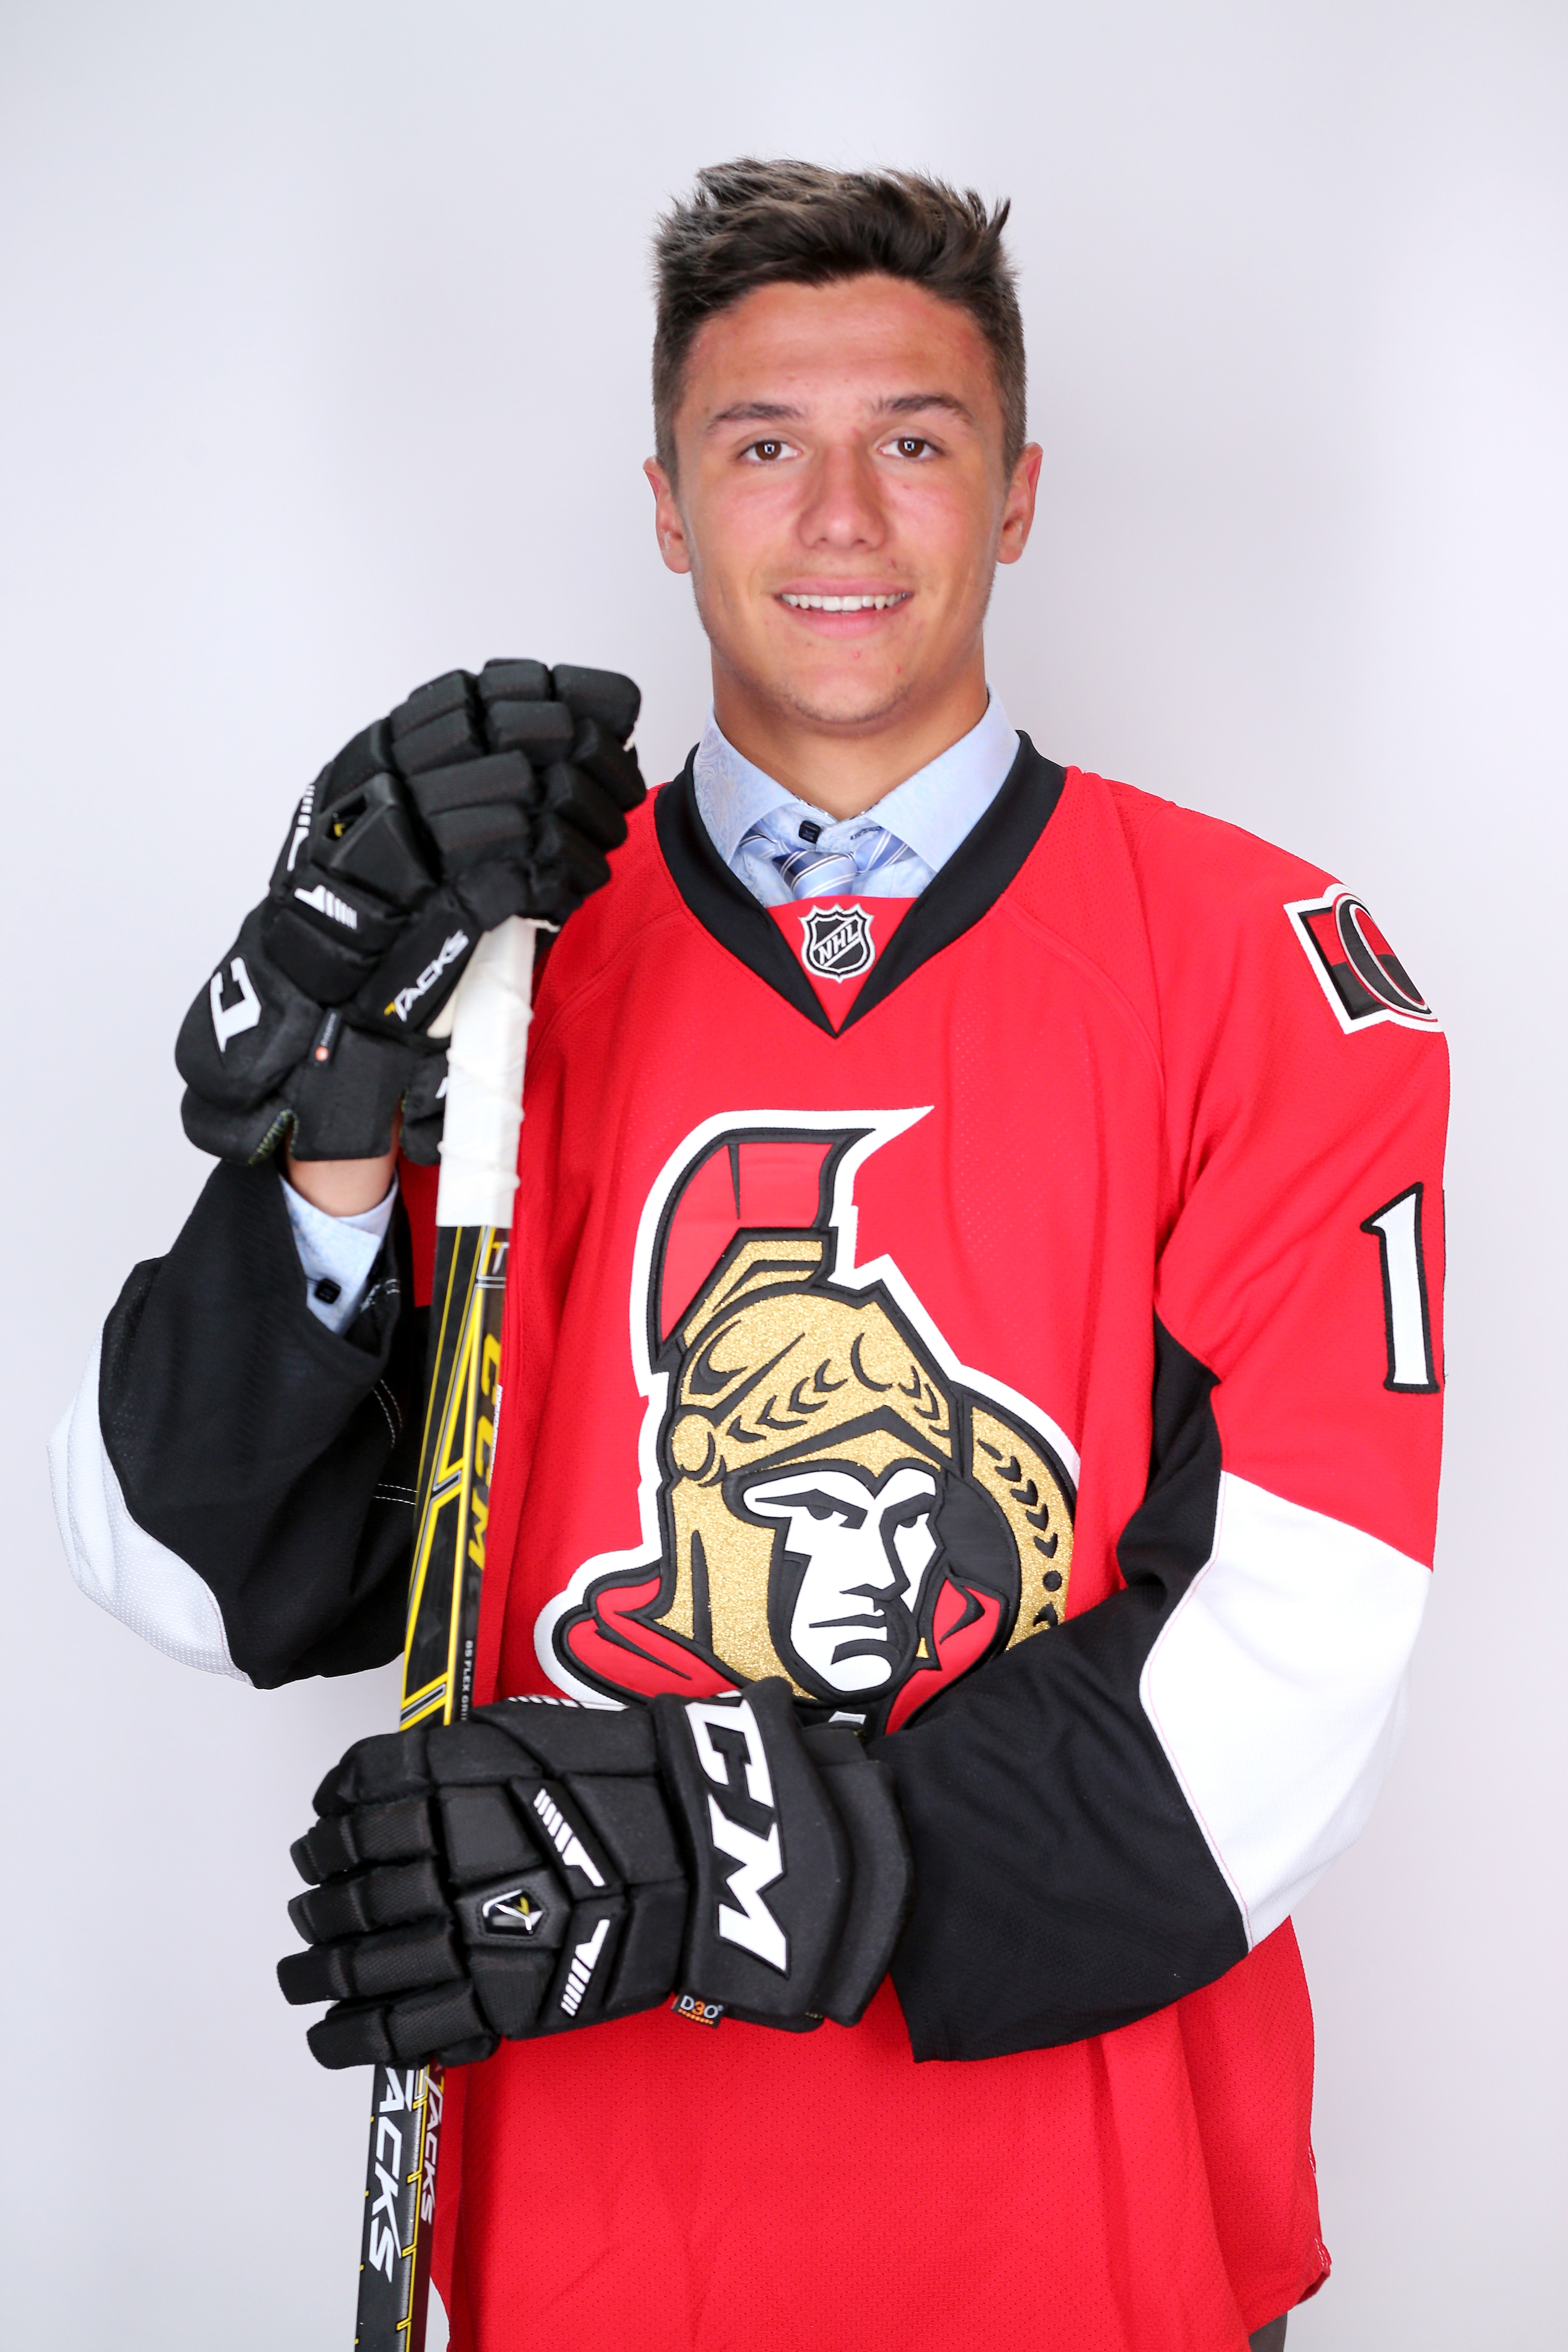 2015 NHL Draft - Portraits